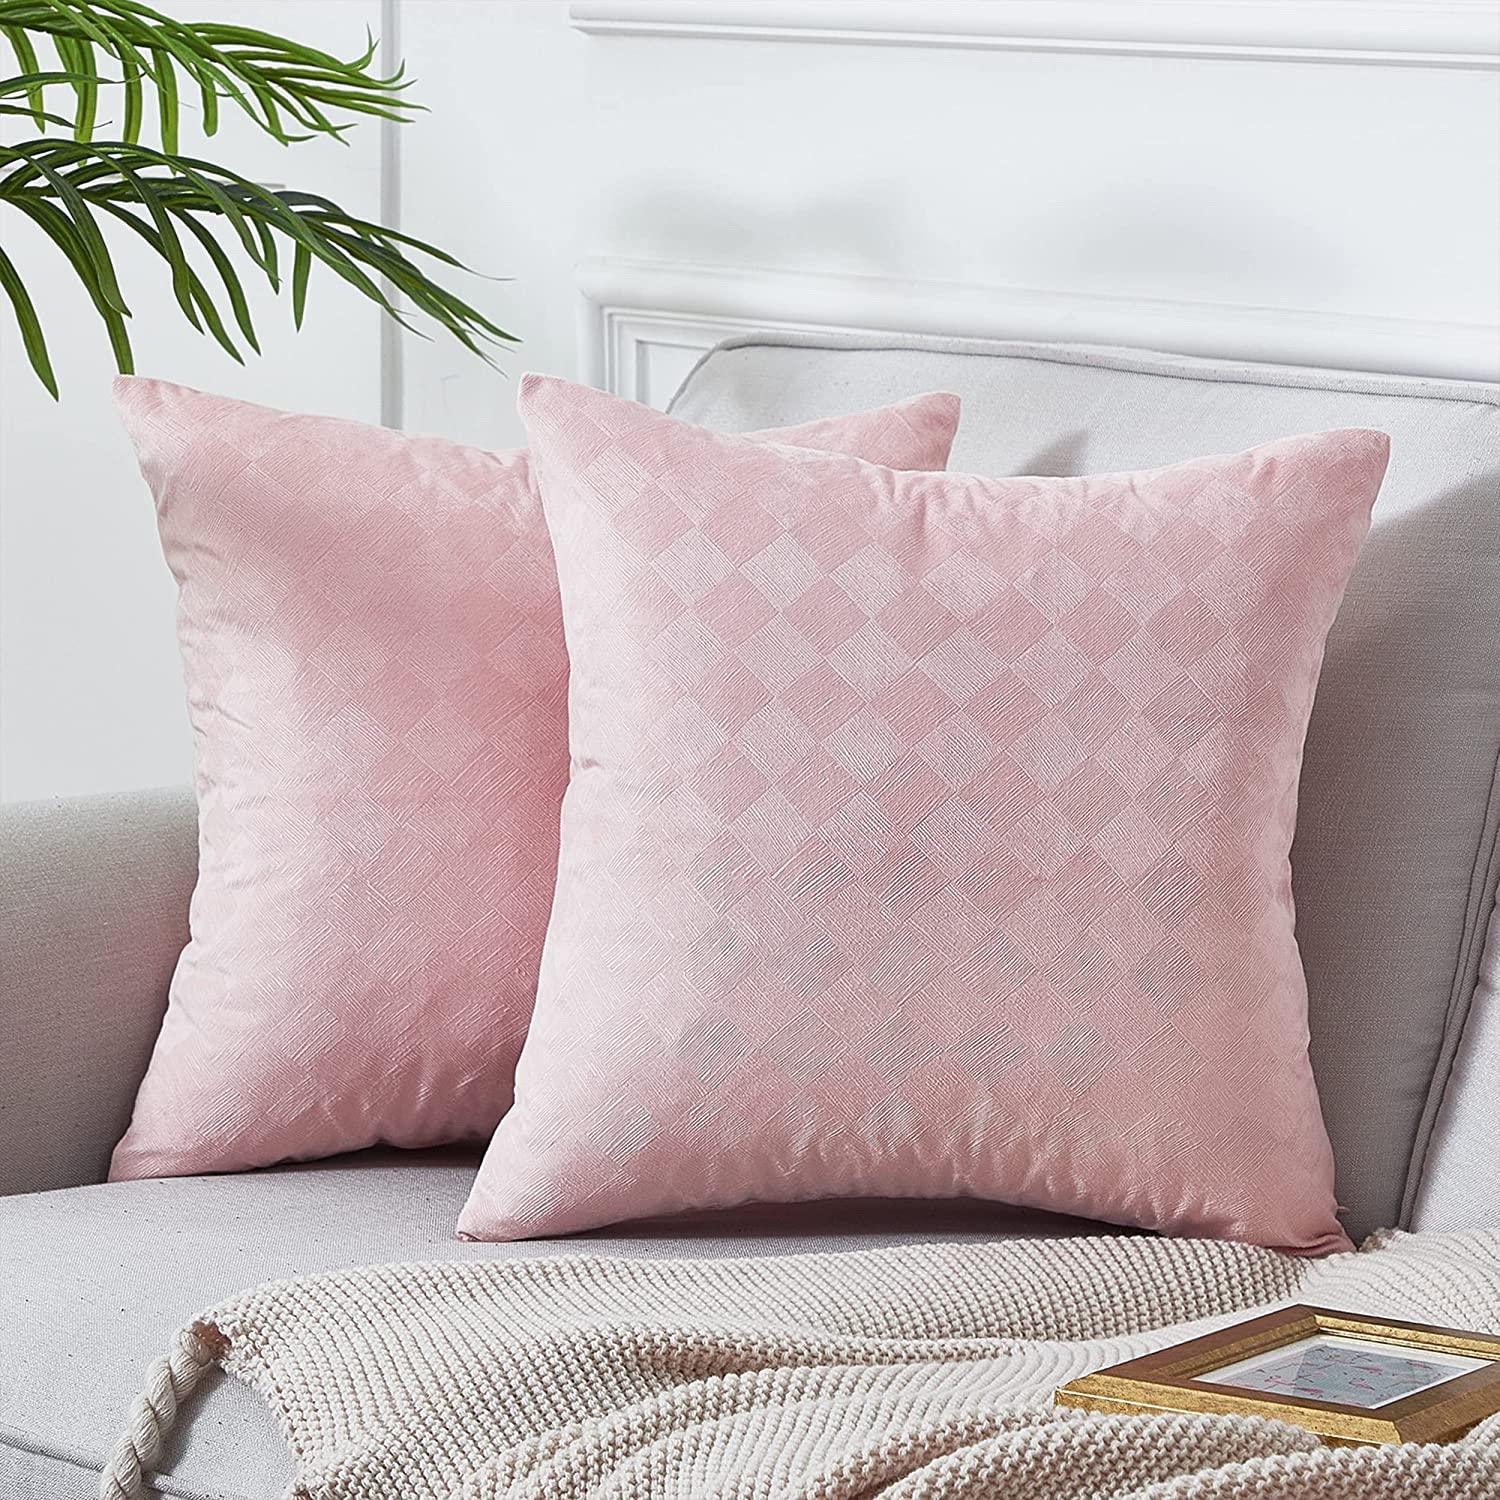 Velvet Pillow Cover With Checkered Fabric Print For Sofa, Bedroom, Office, Car,2Packs - Topfinel